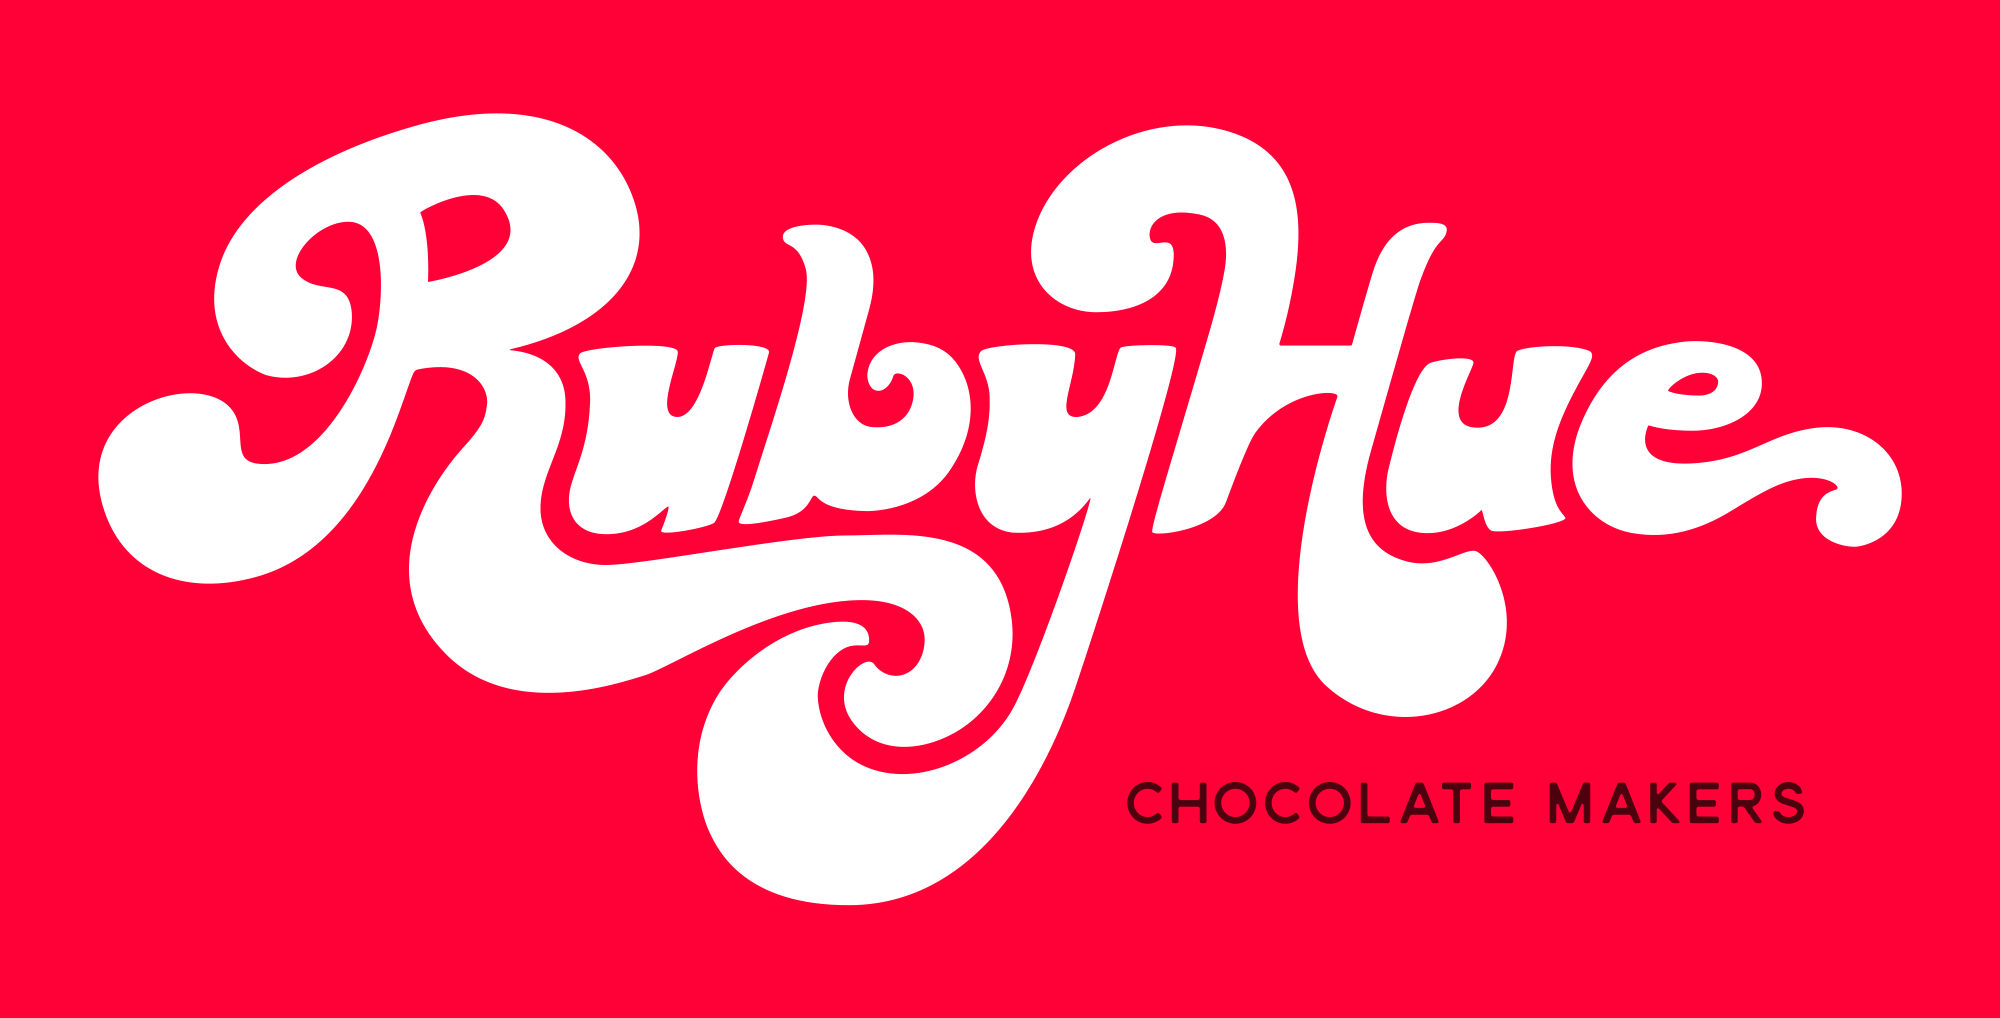 RubyHue_Identity02b.png